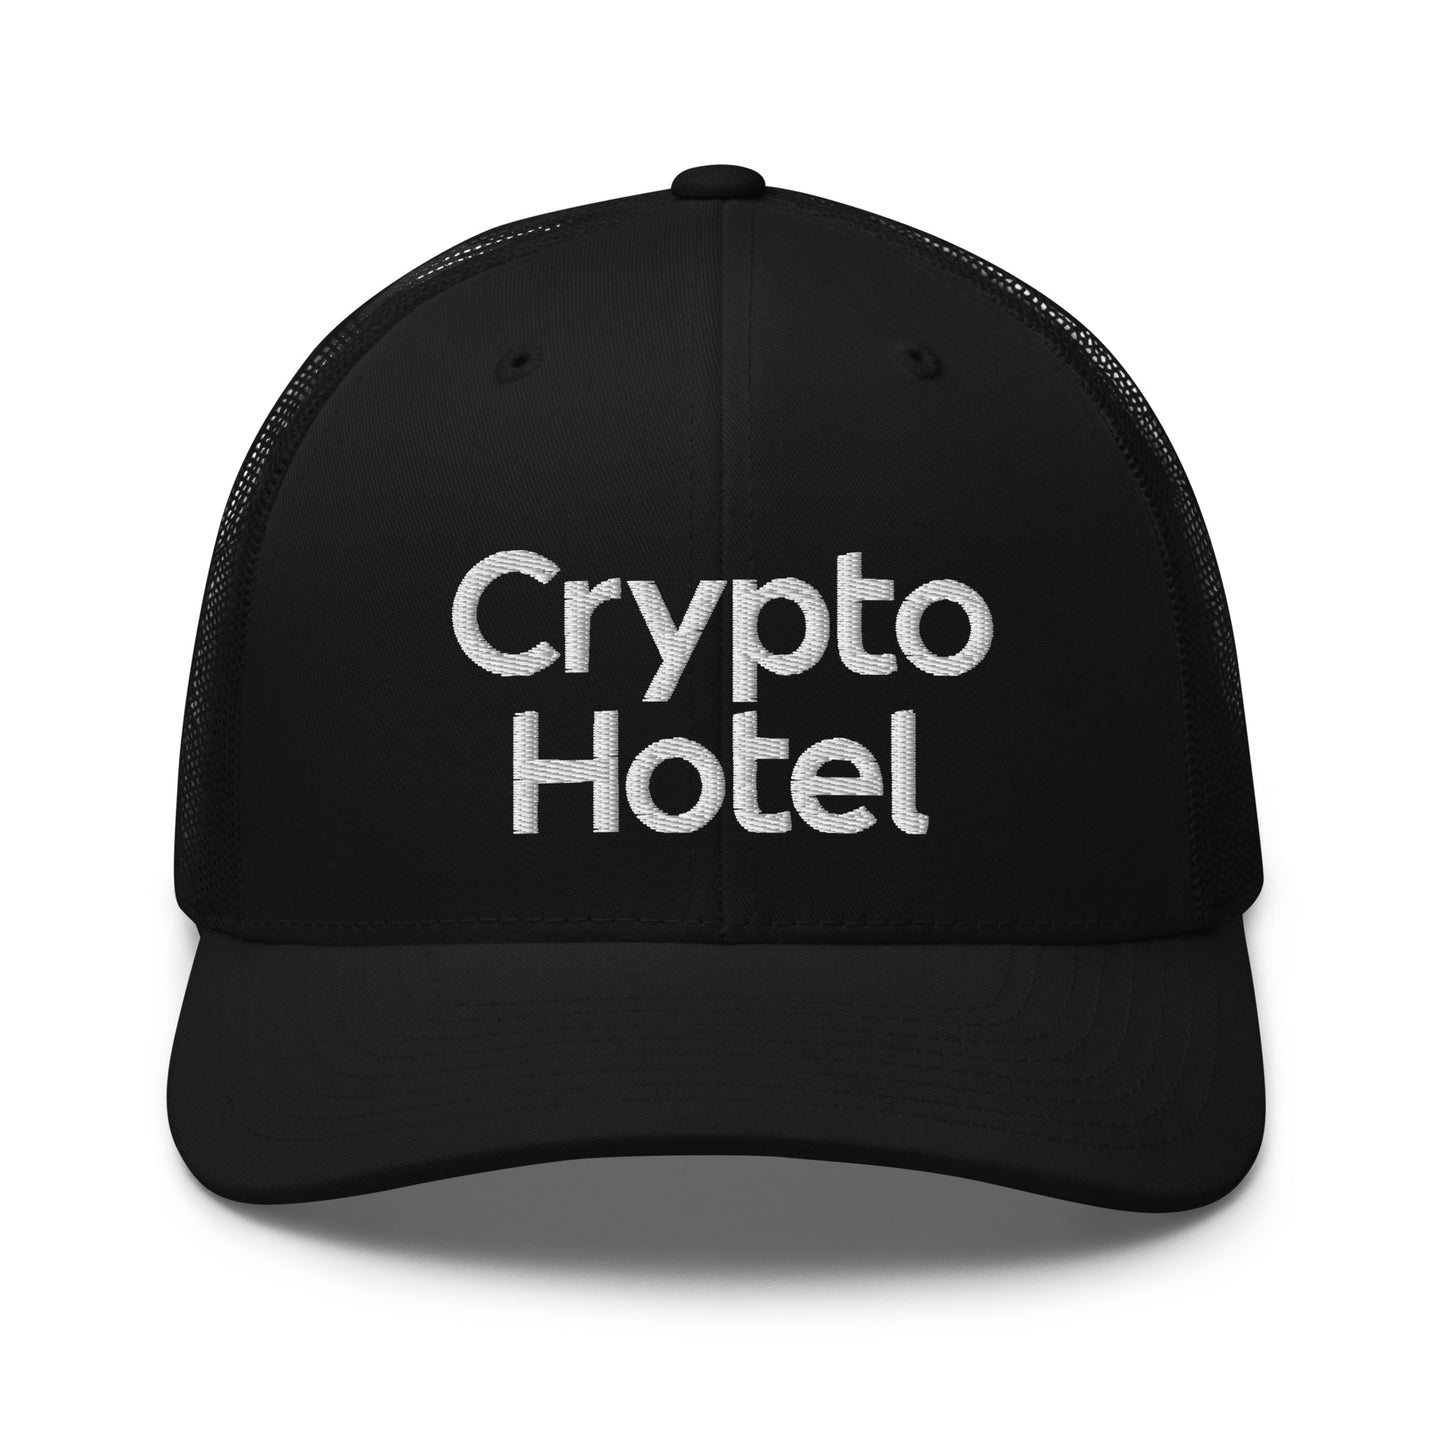 Crypto Hotel Cap